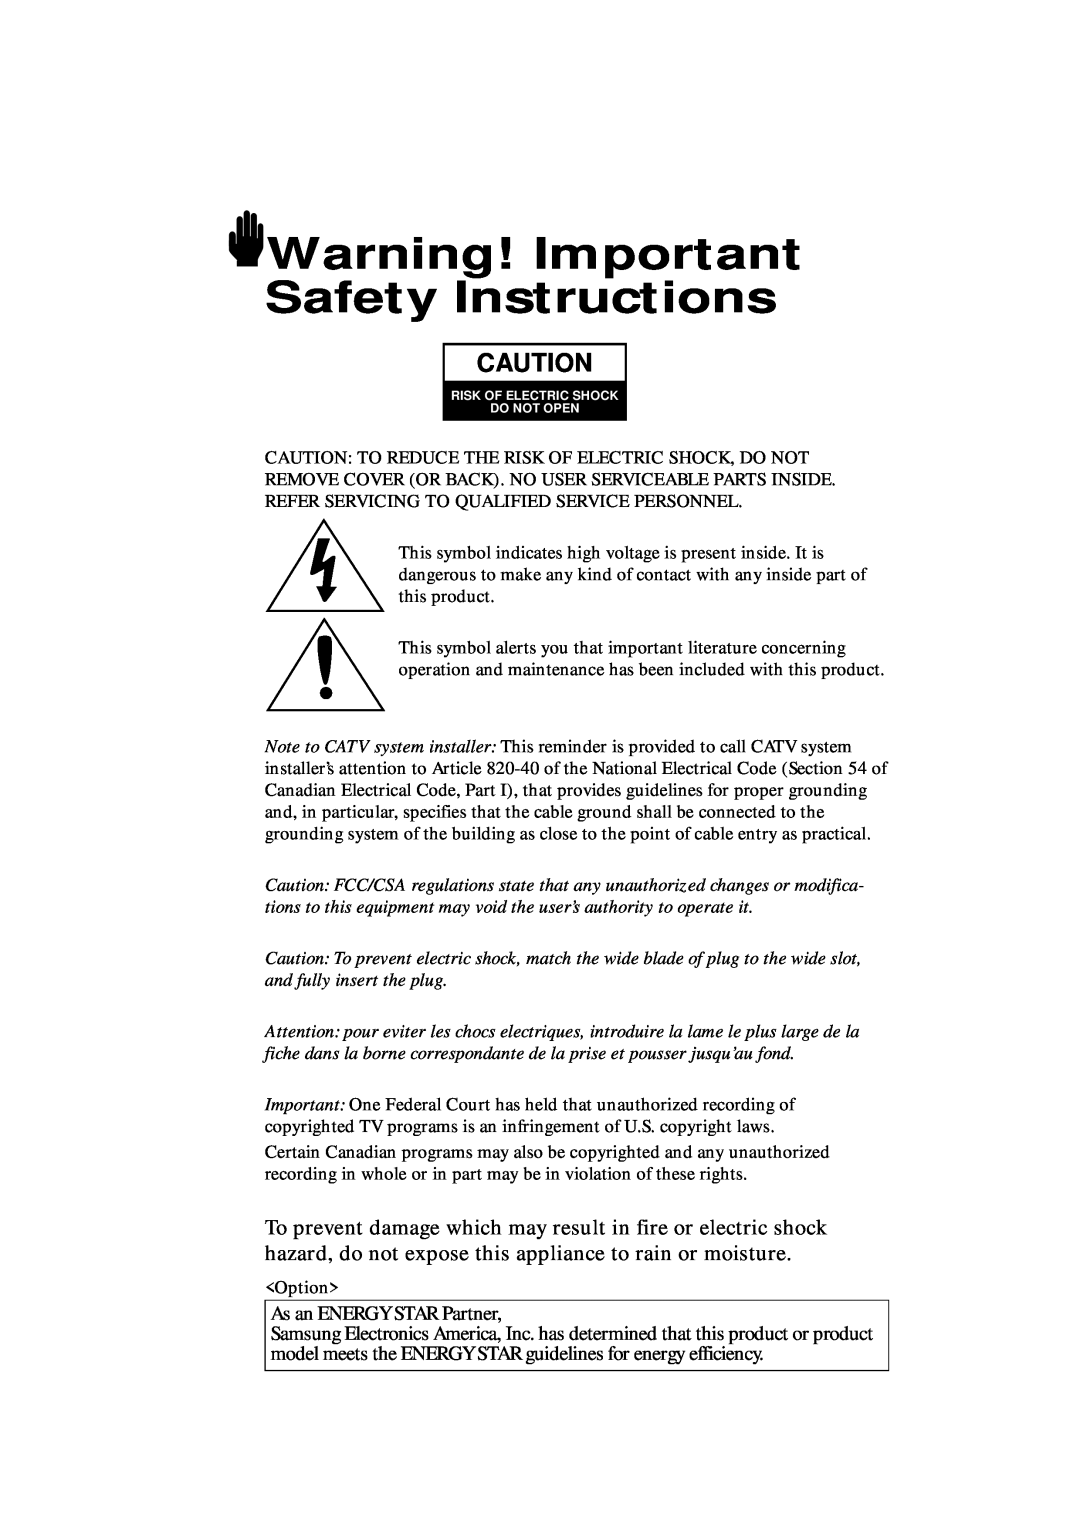 Samsung TXK 3676, TXL 3276, TXL 3676, TXK 3276 manual Warning! Important Safety Instructions, As an ENERGY STAR Partner 